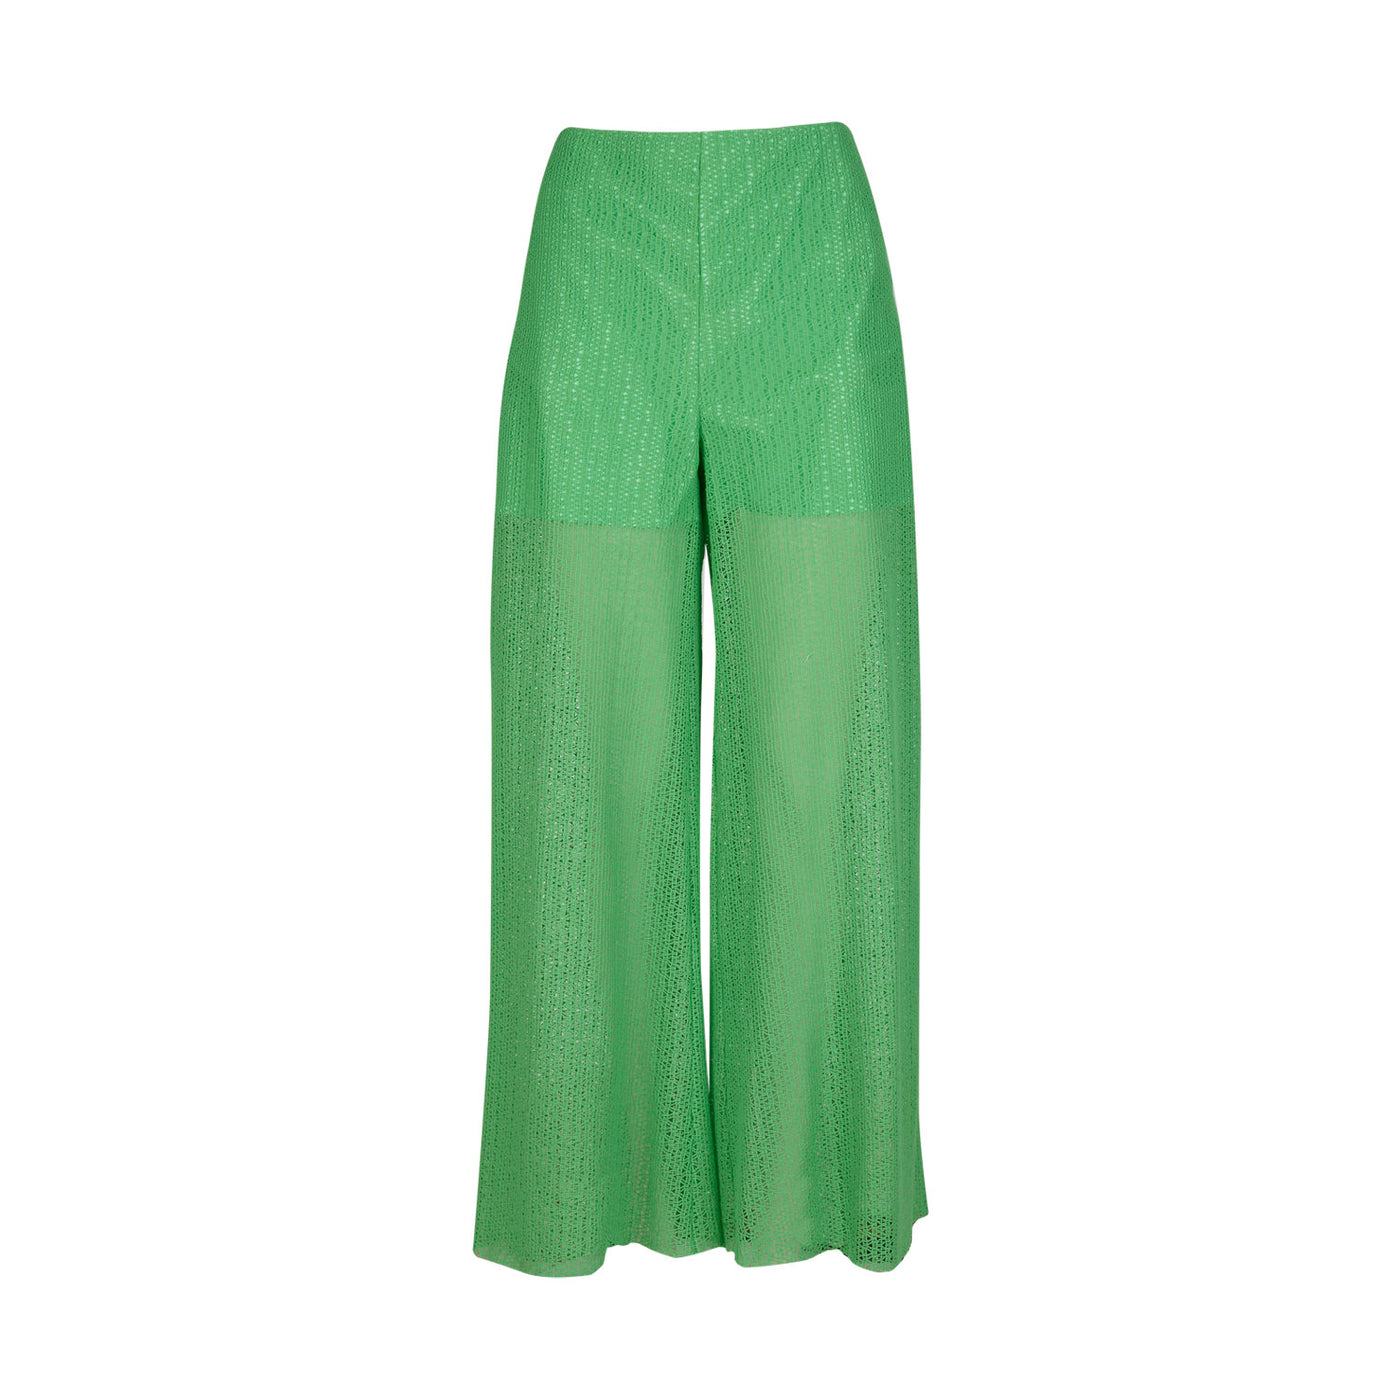 Organic Cotton Lace Green Large Pants